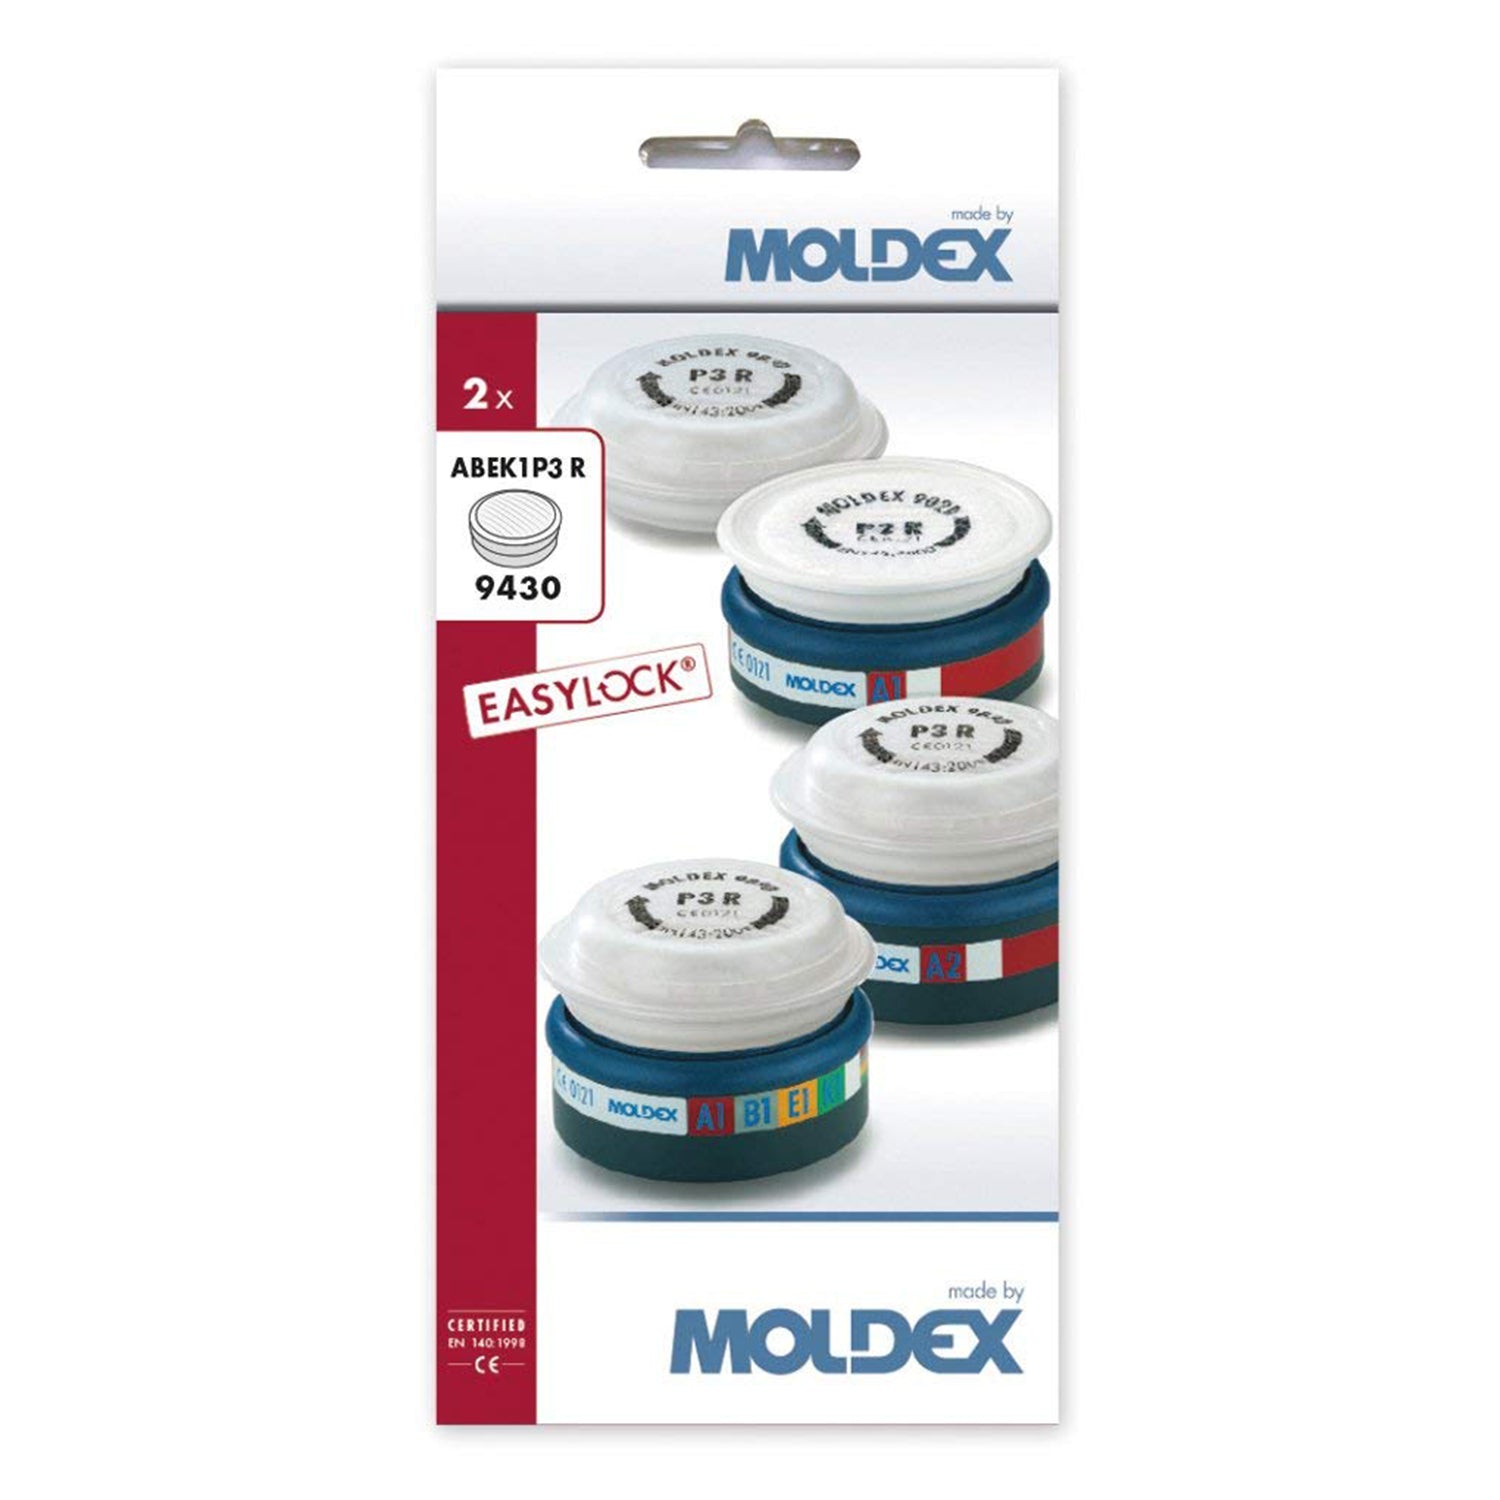 MOLDEX 9430 A1B1E1K1P3 R Pre-assembled Filters retail box